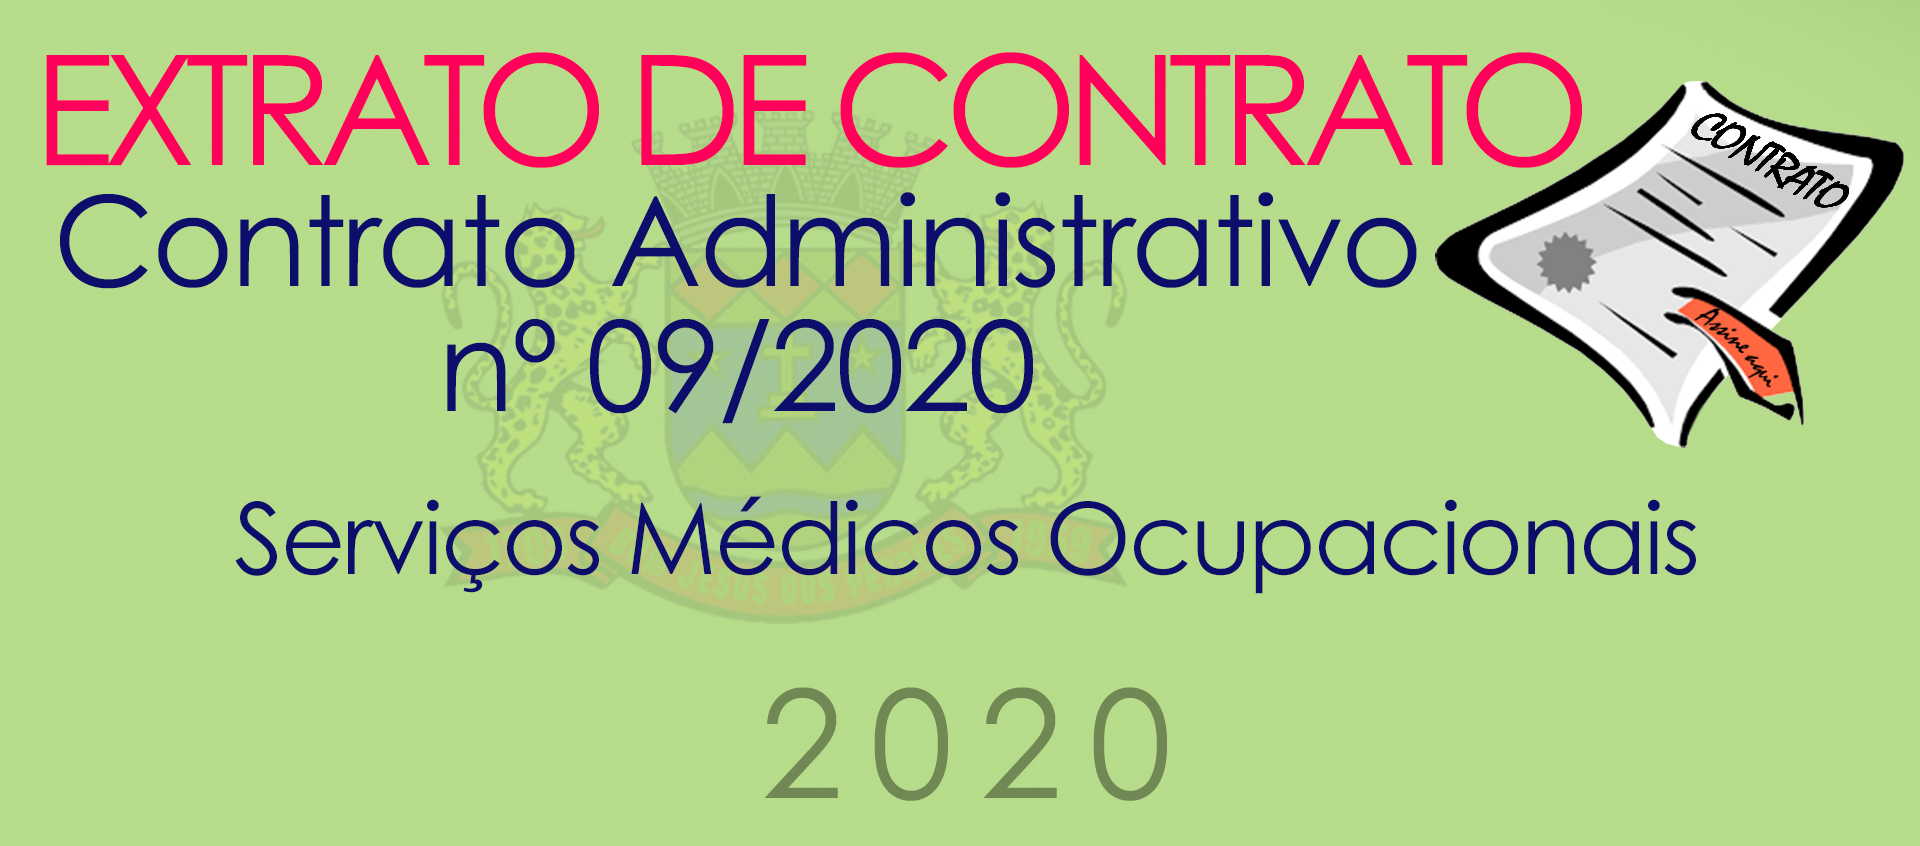 Extrato de Contrato Administrativo nº 09 de 2020